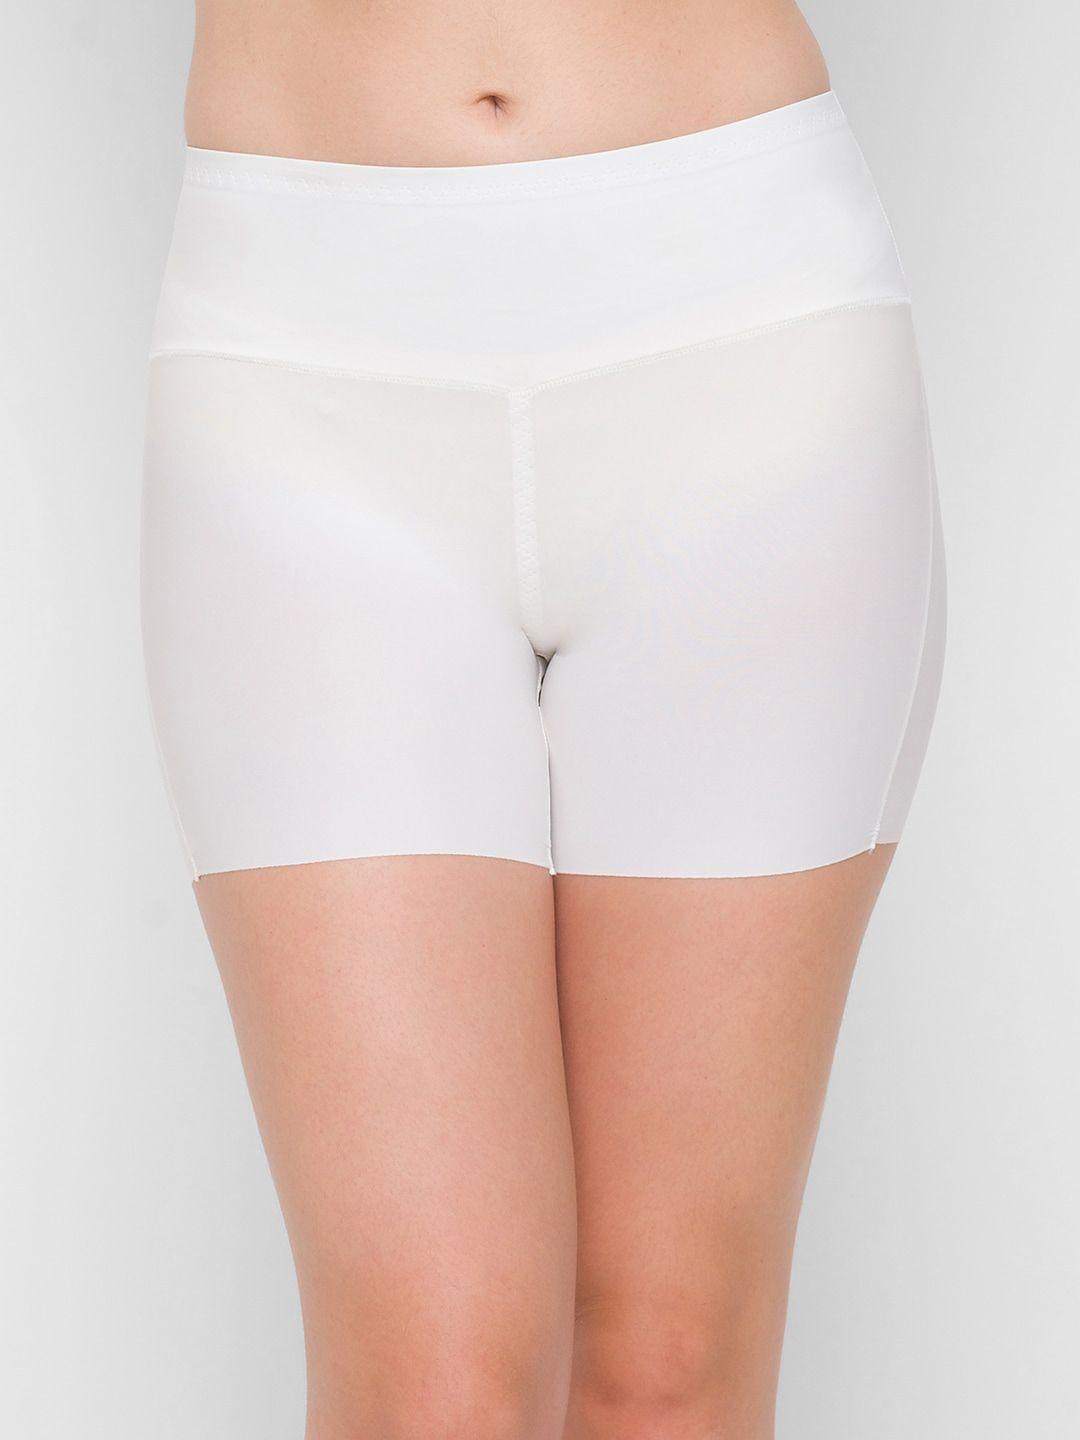 fashionrack-women-white-solid-boy-shorts